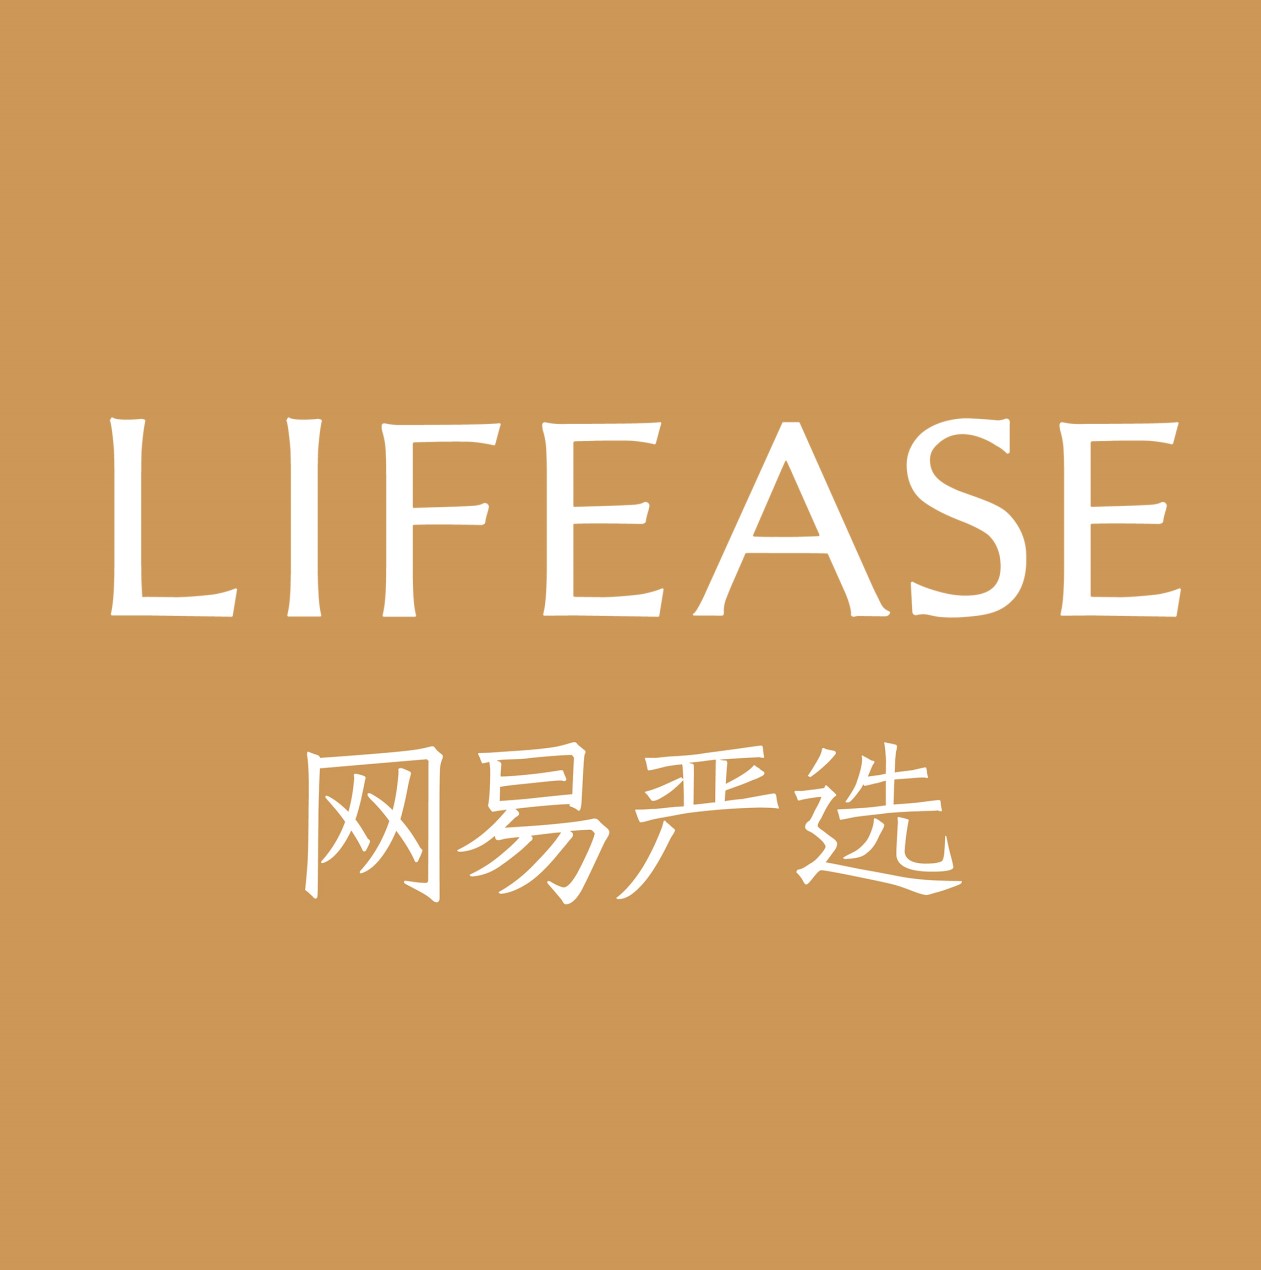 Lifease